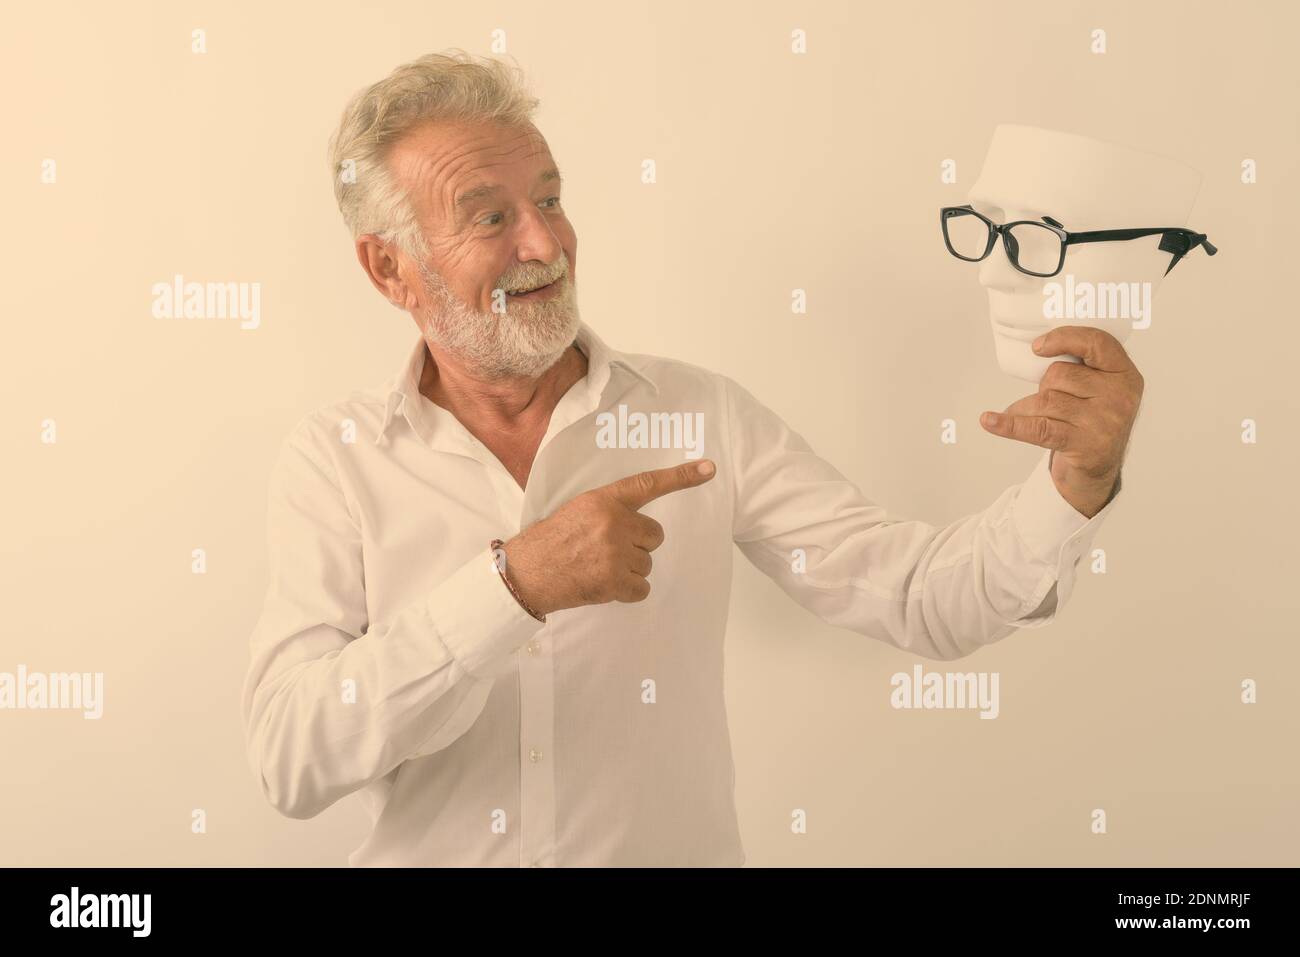 Studio shot of happy senior bearded man smiling while holding and pointing at white mask with eyeglasses against white background Stock Photo